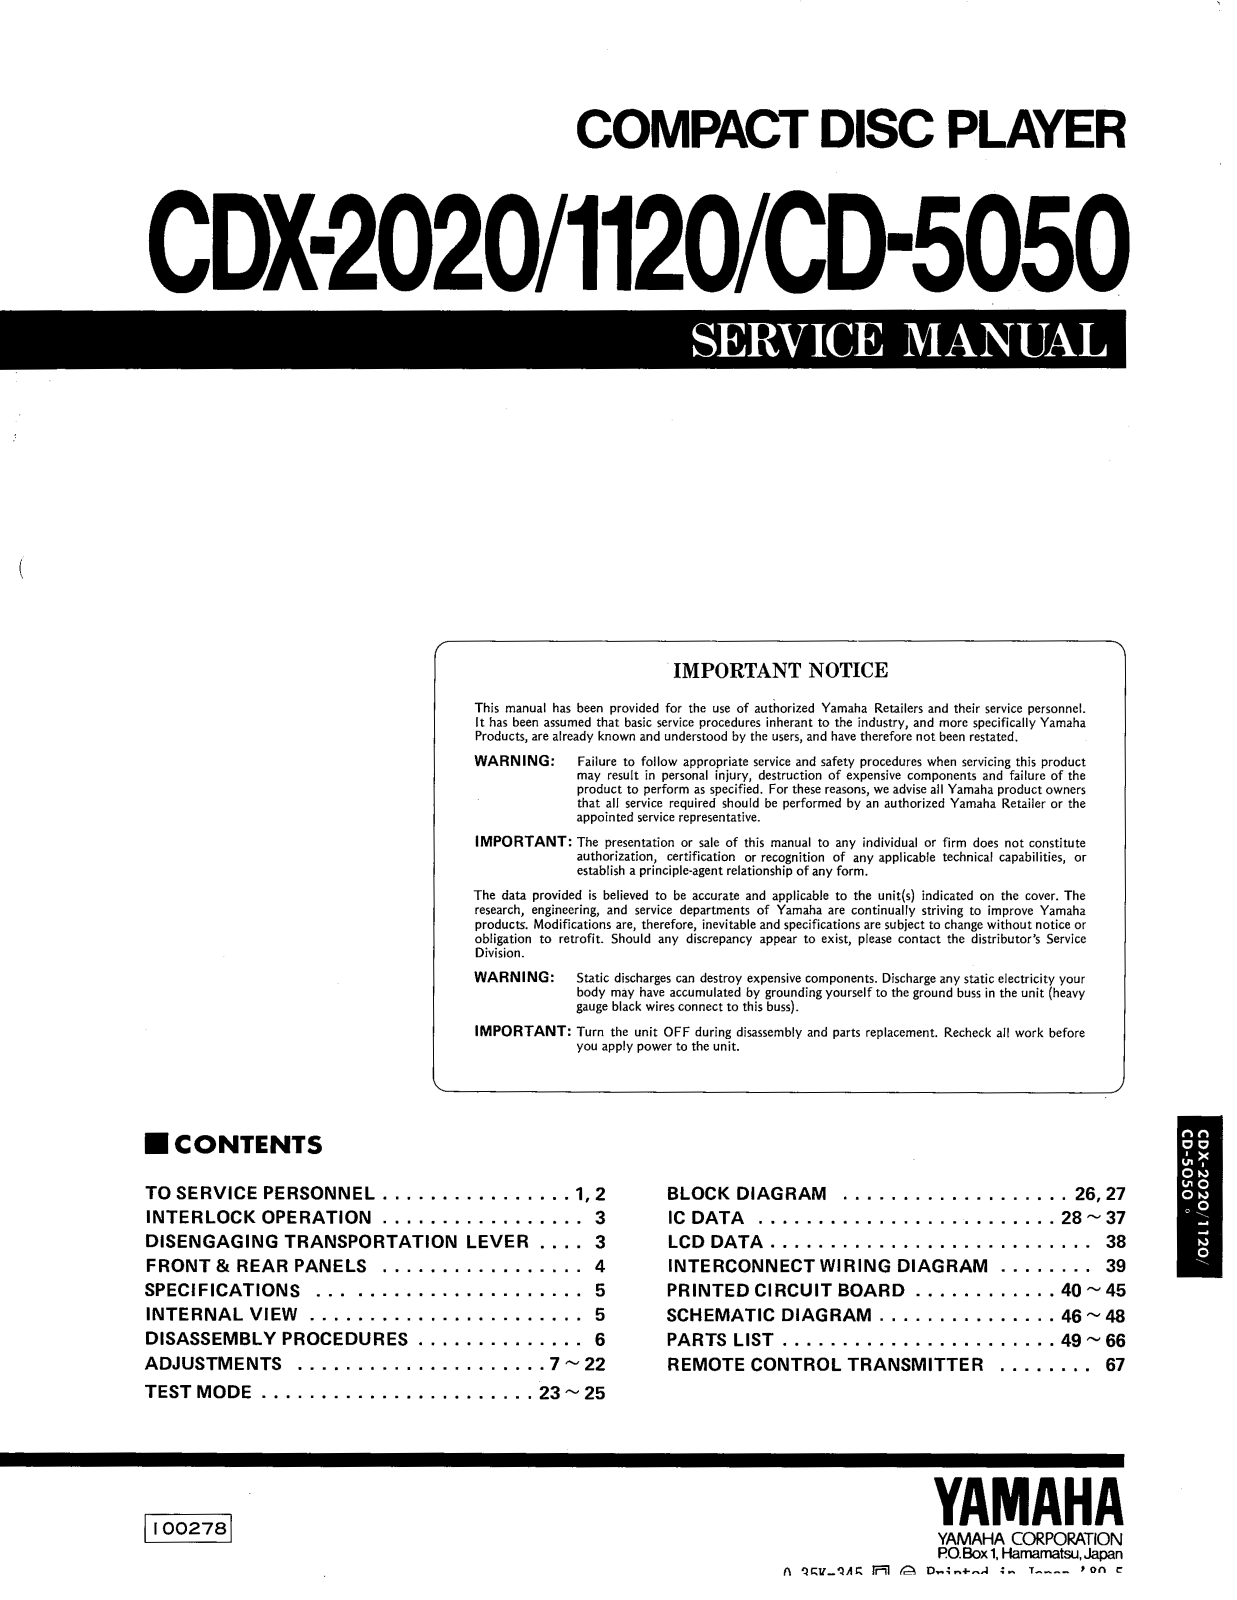 Yamaha CDX-2020 Service Manual